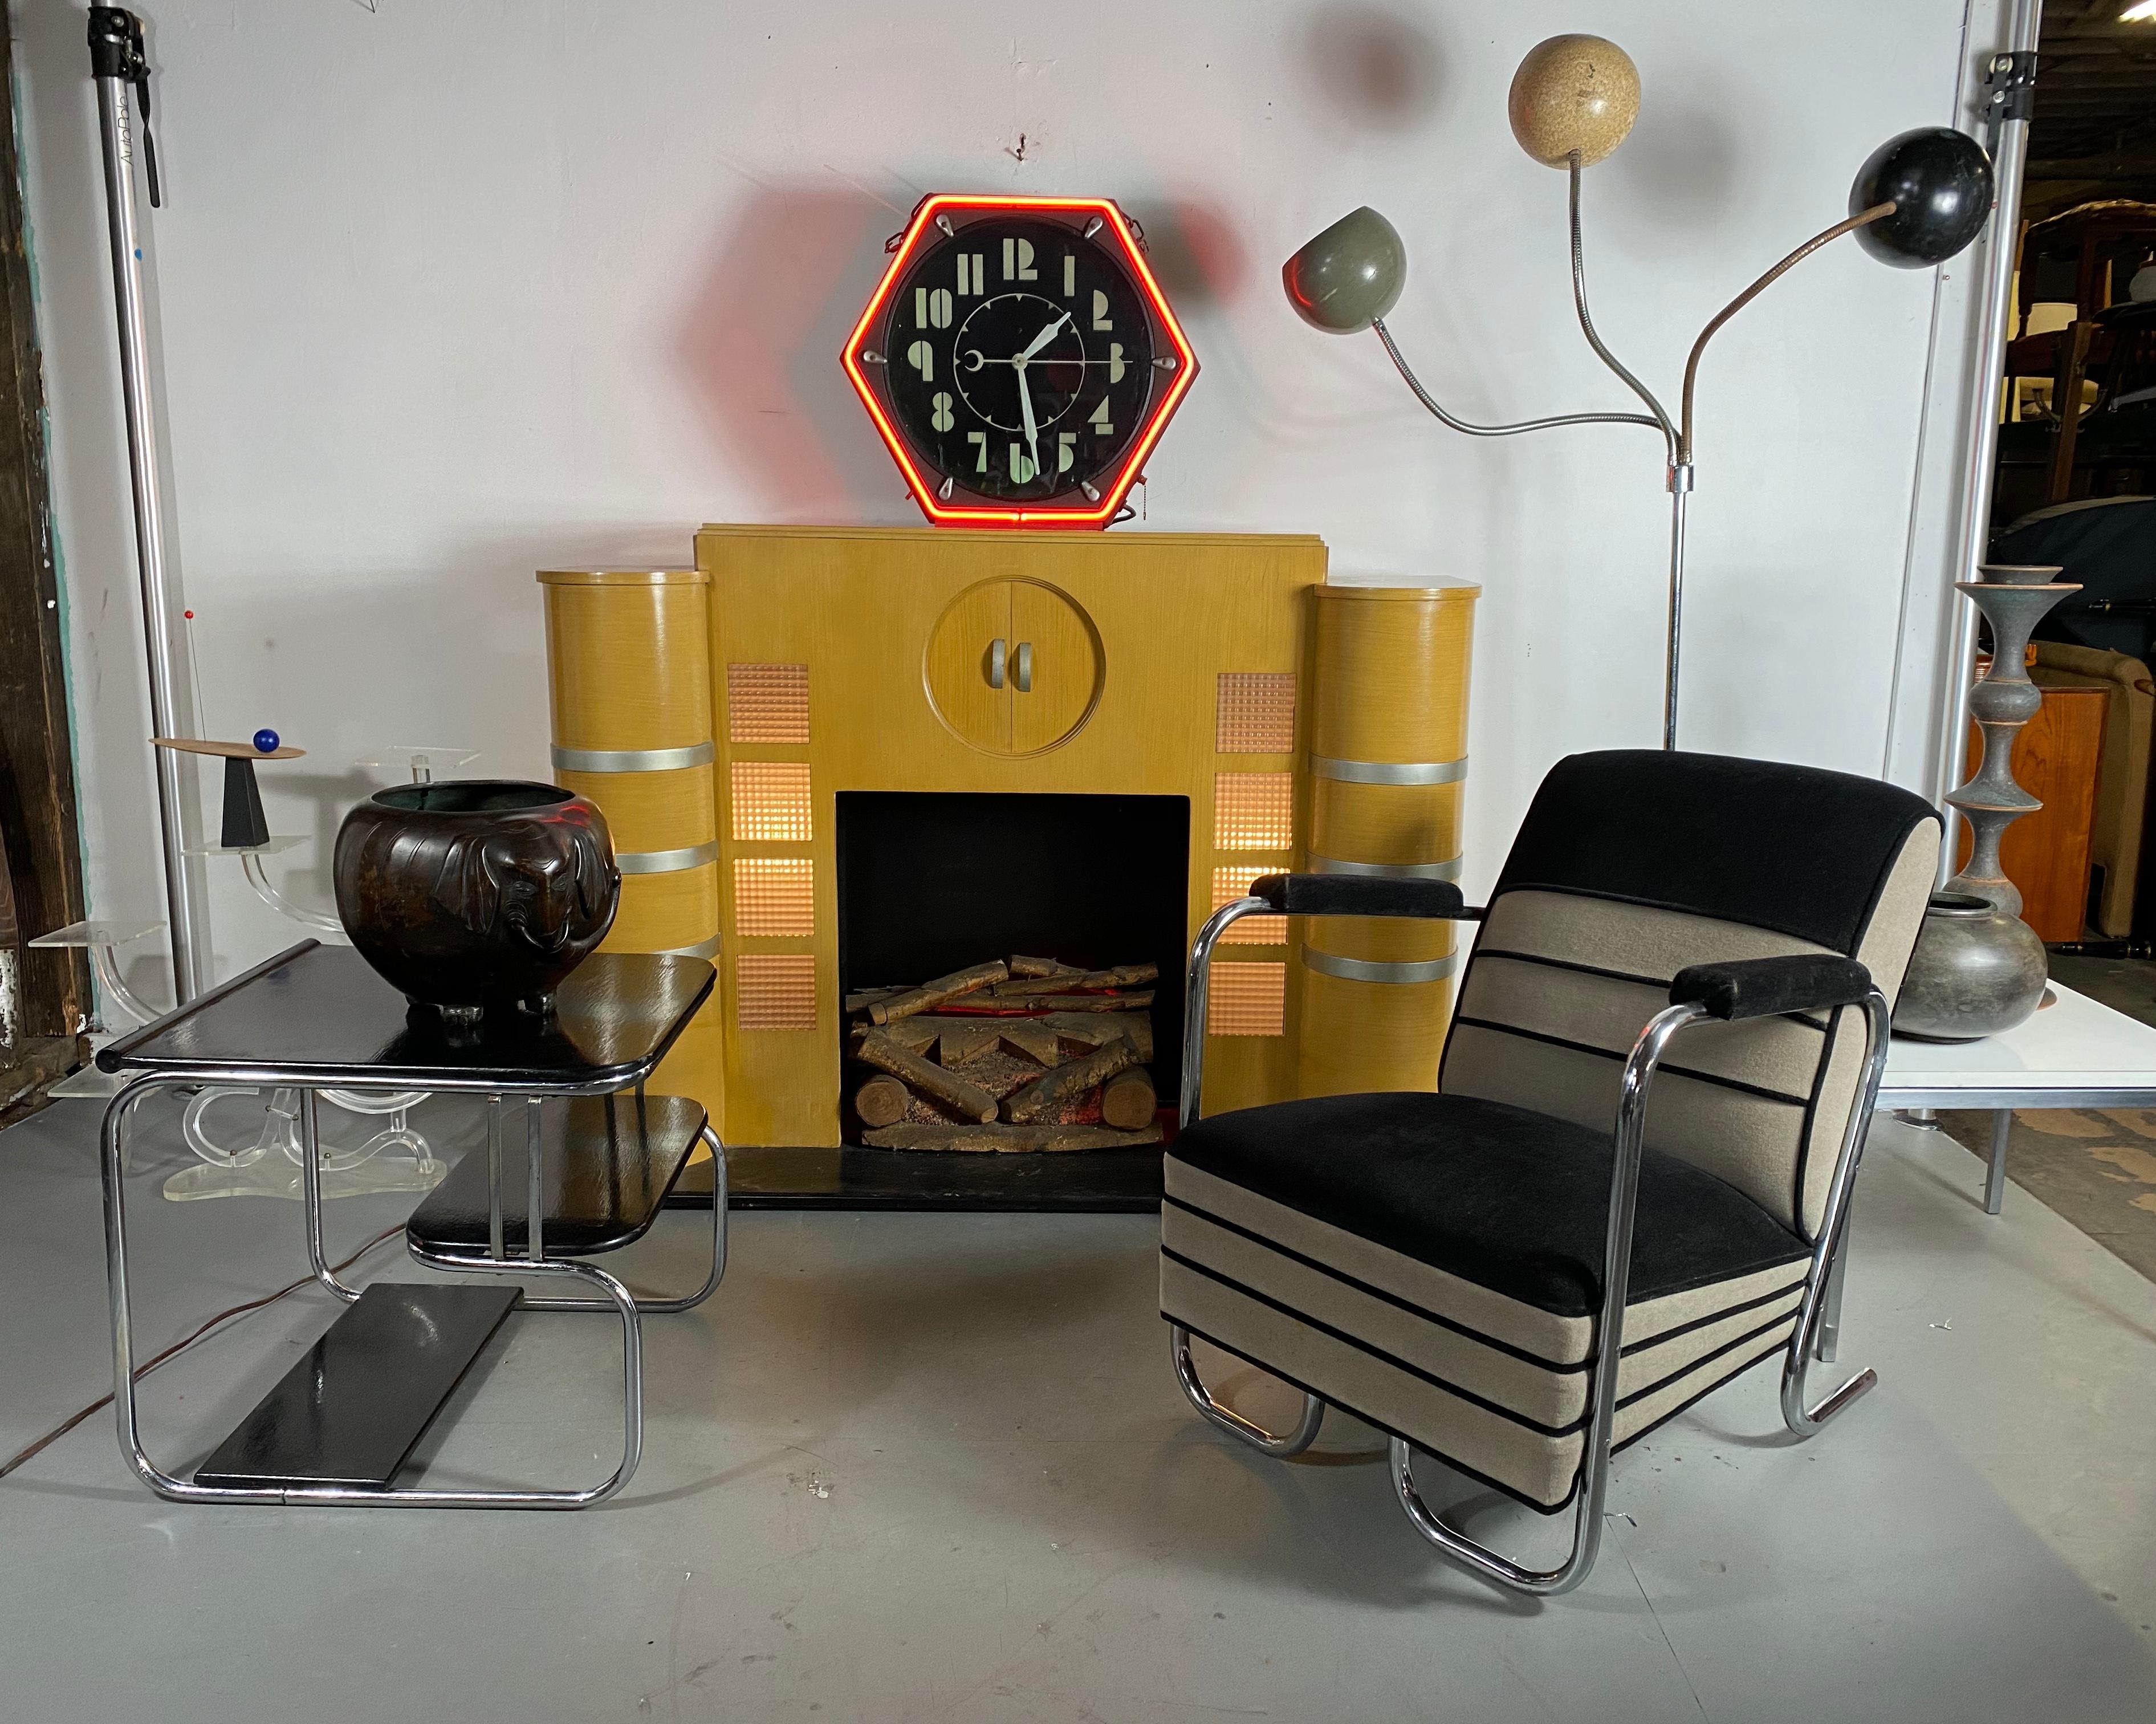 Seldom Seen Art Deco Neon Hexagon Clock, 'The Electric Clock Co. Cleveland 2